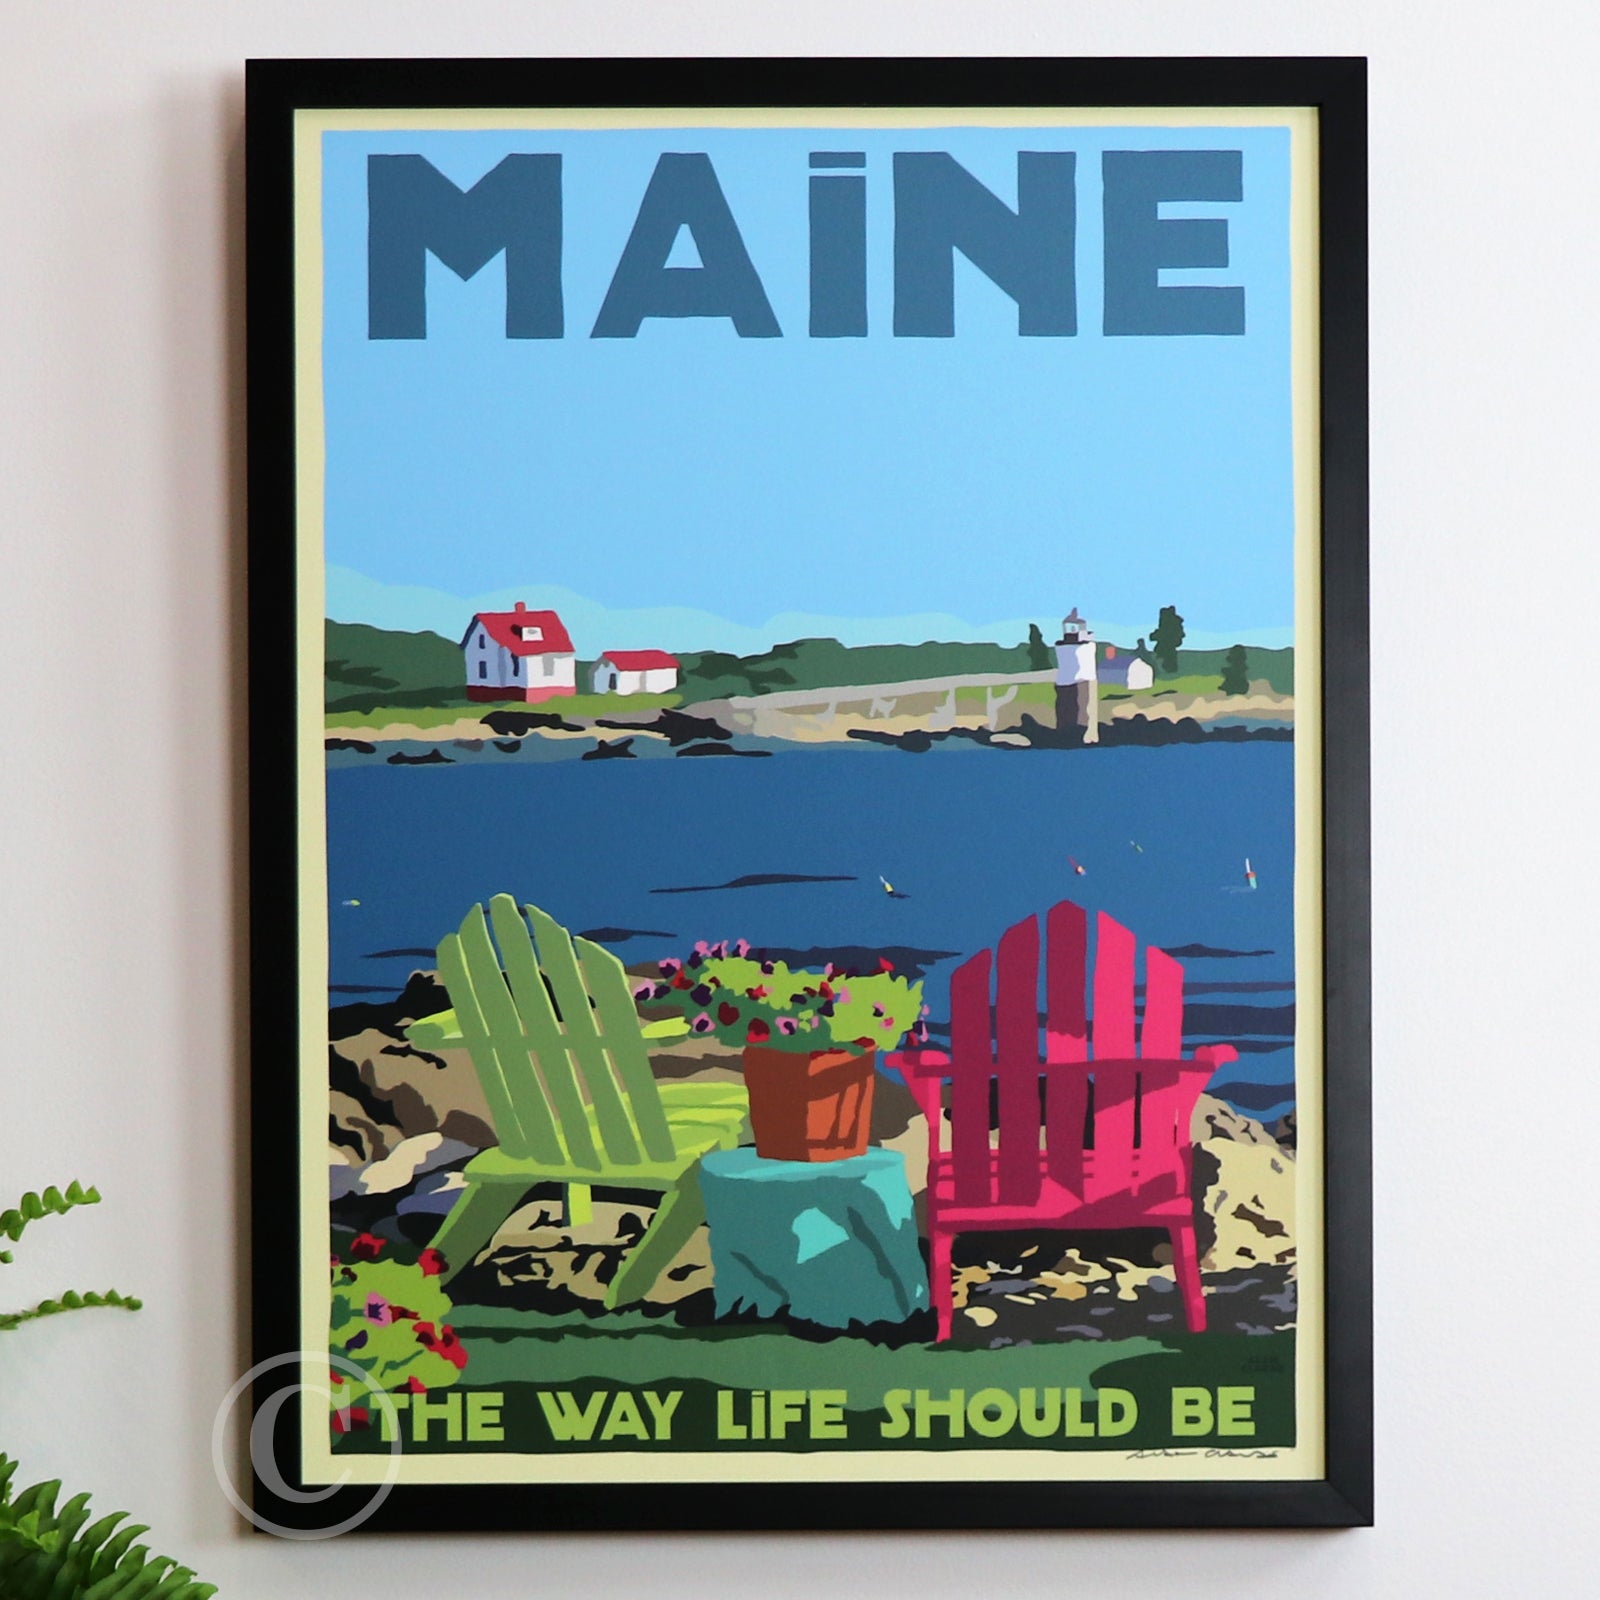 Chairs Overlooking Ram Island Light Art Print 18" x 24" Framed Travel Poster By Alan Claude - Maine